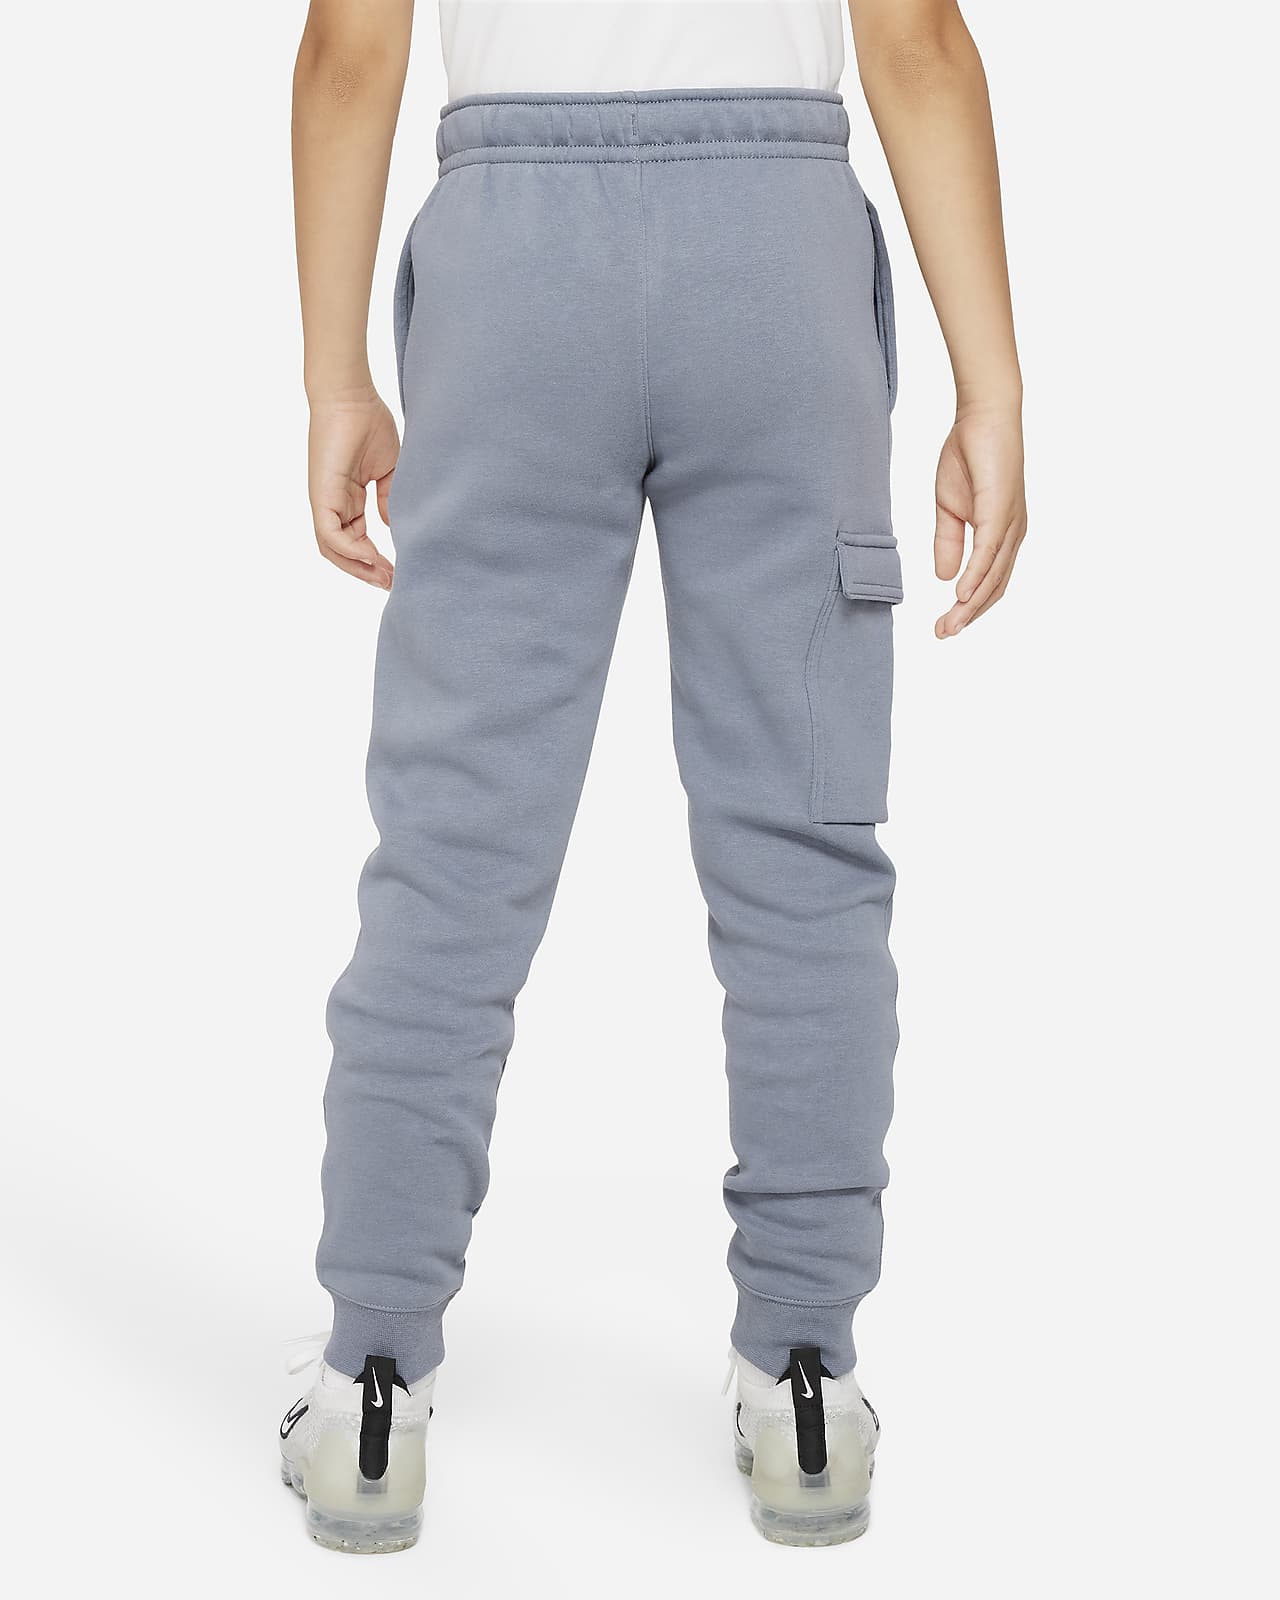 Nike Tech Fleece Utility Cargo Joggers Pants Trousers Grey Heather Size  Medium